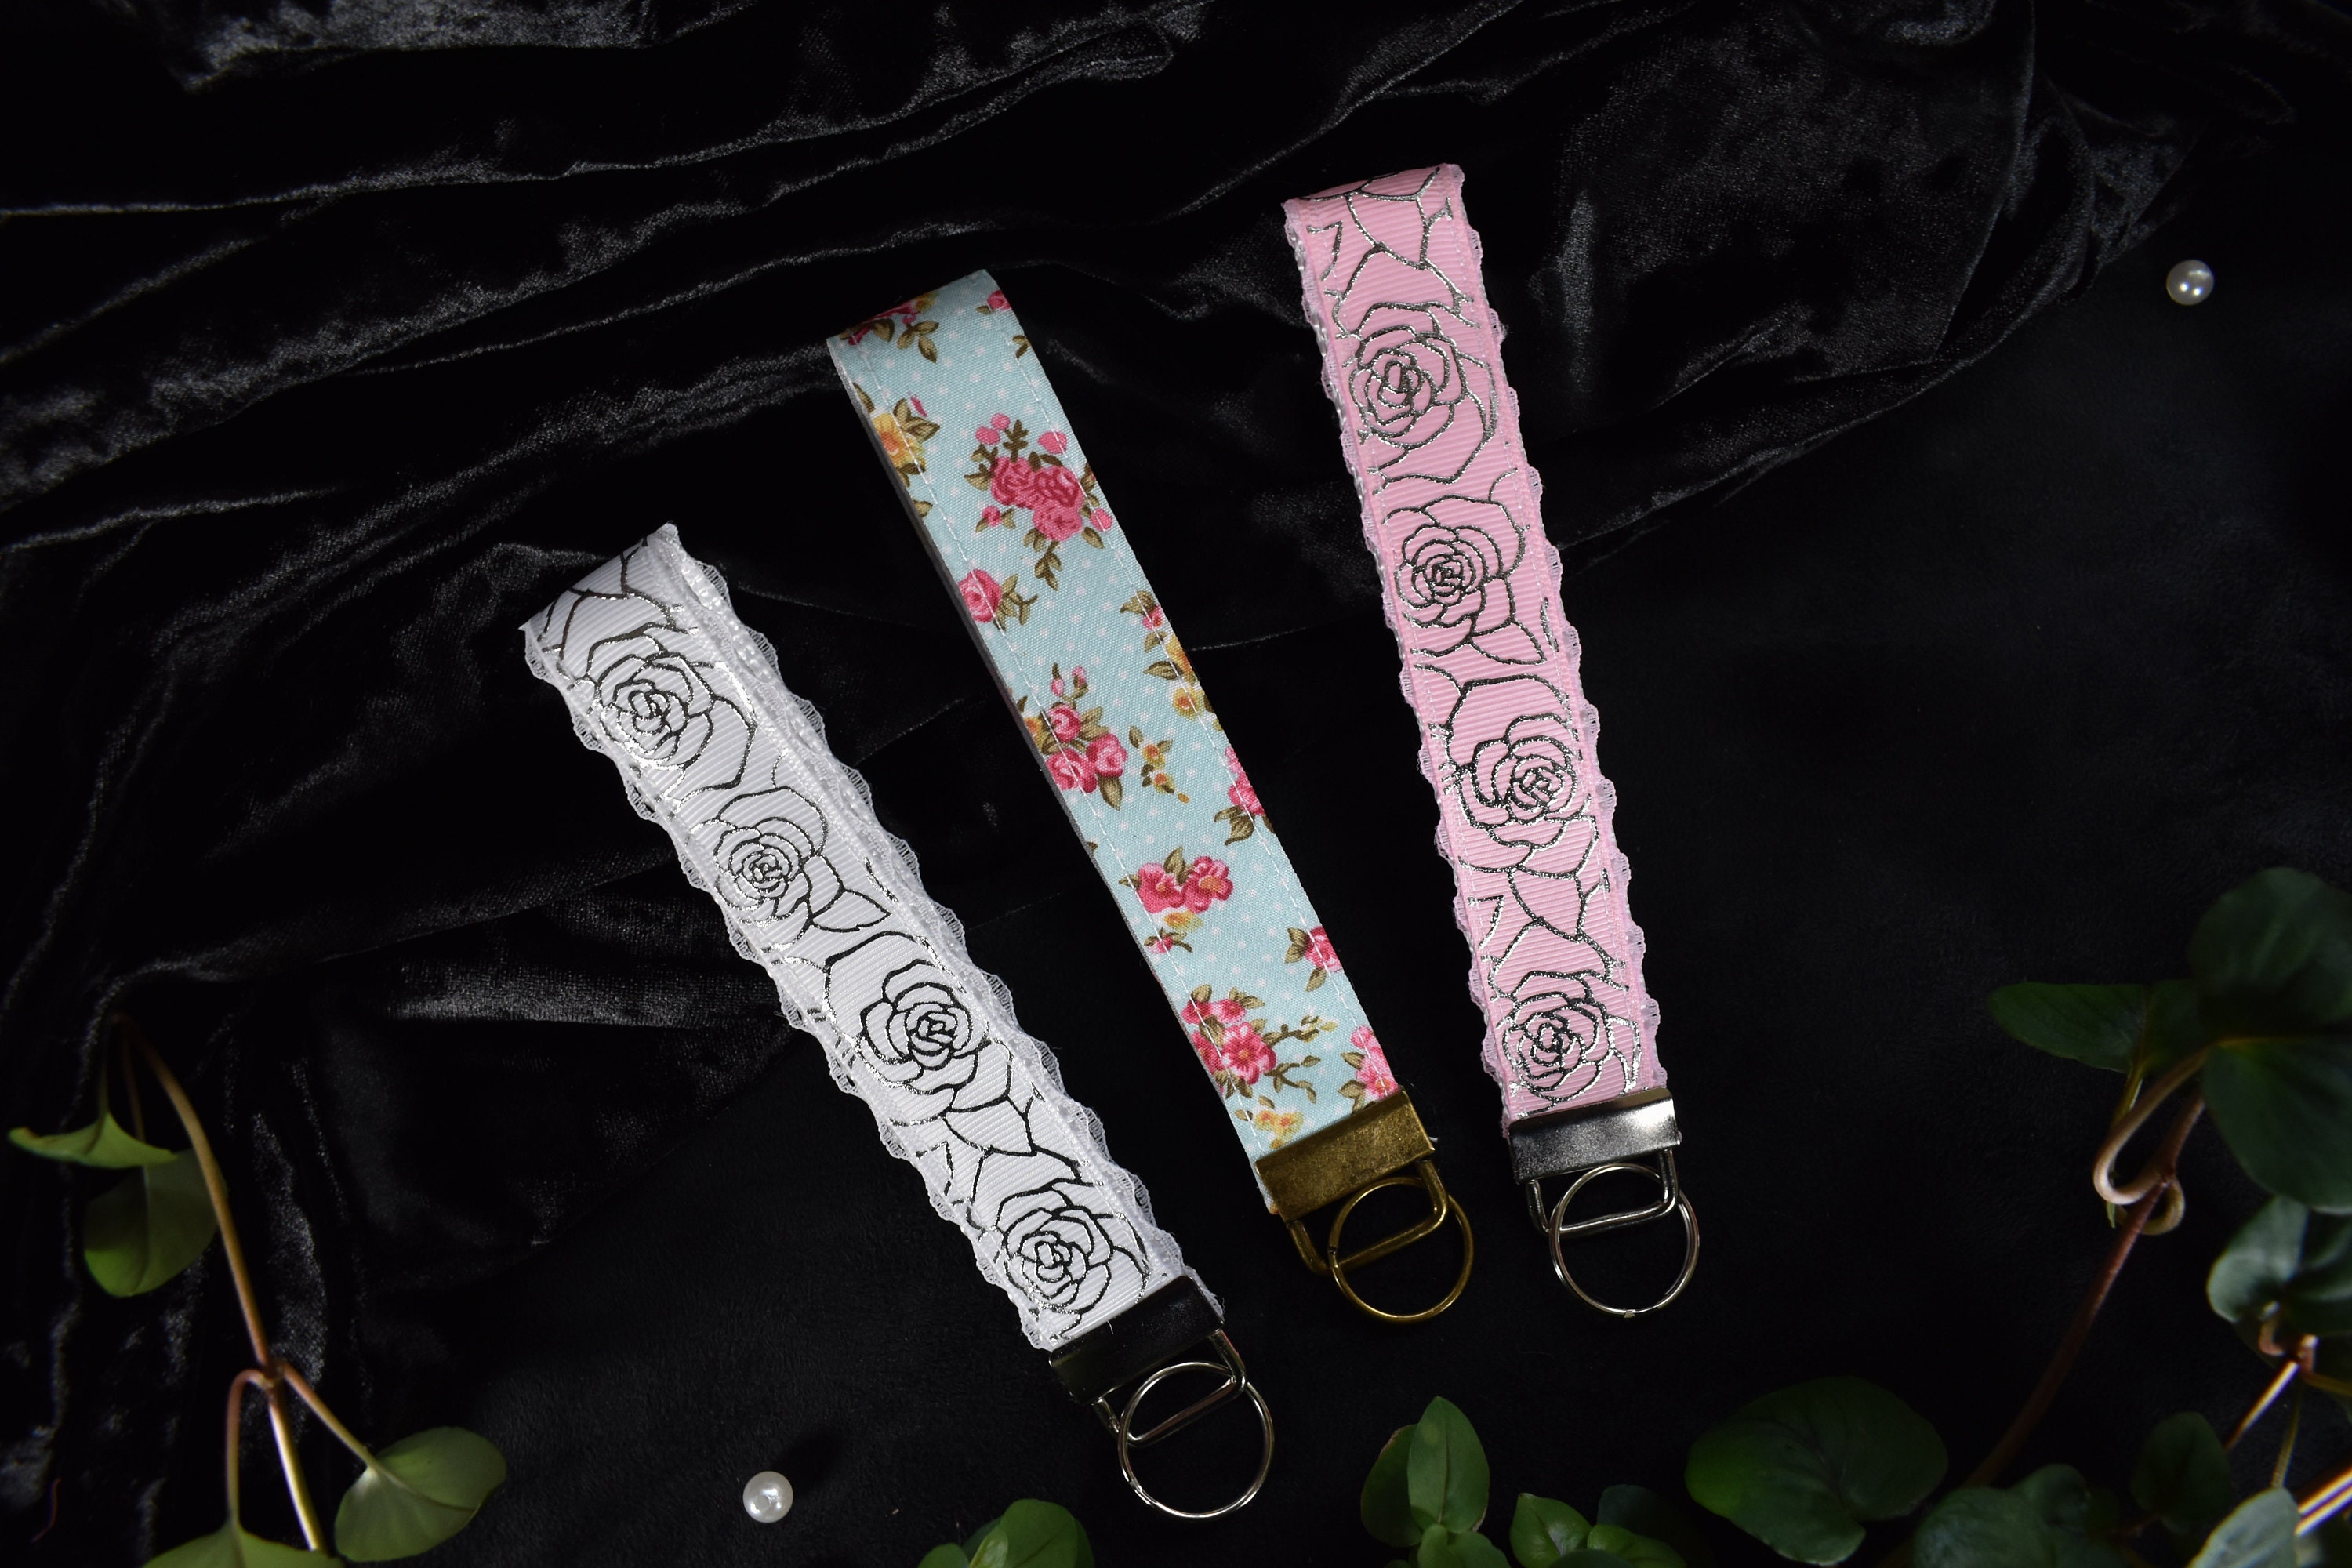 flower keychains / Wrist key chain / cute gift / gift under 20 / keychain / goth / altfashion / pick your style photo